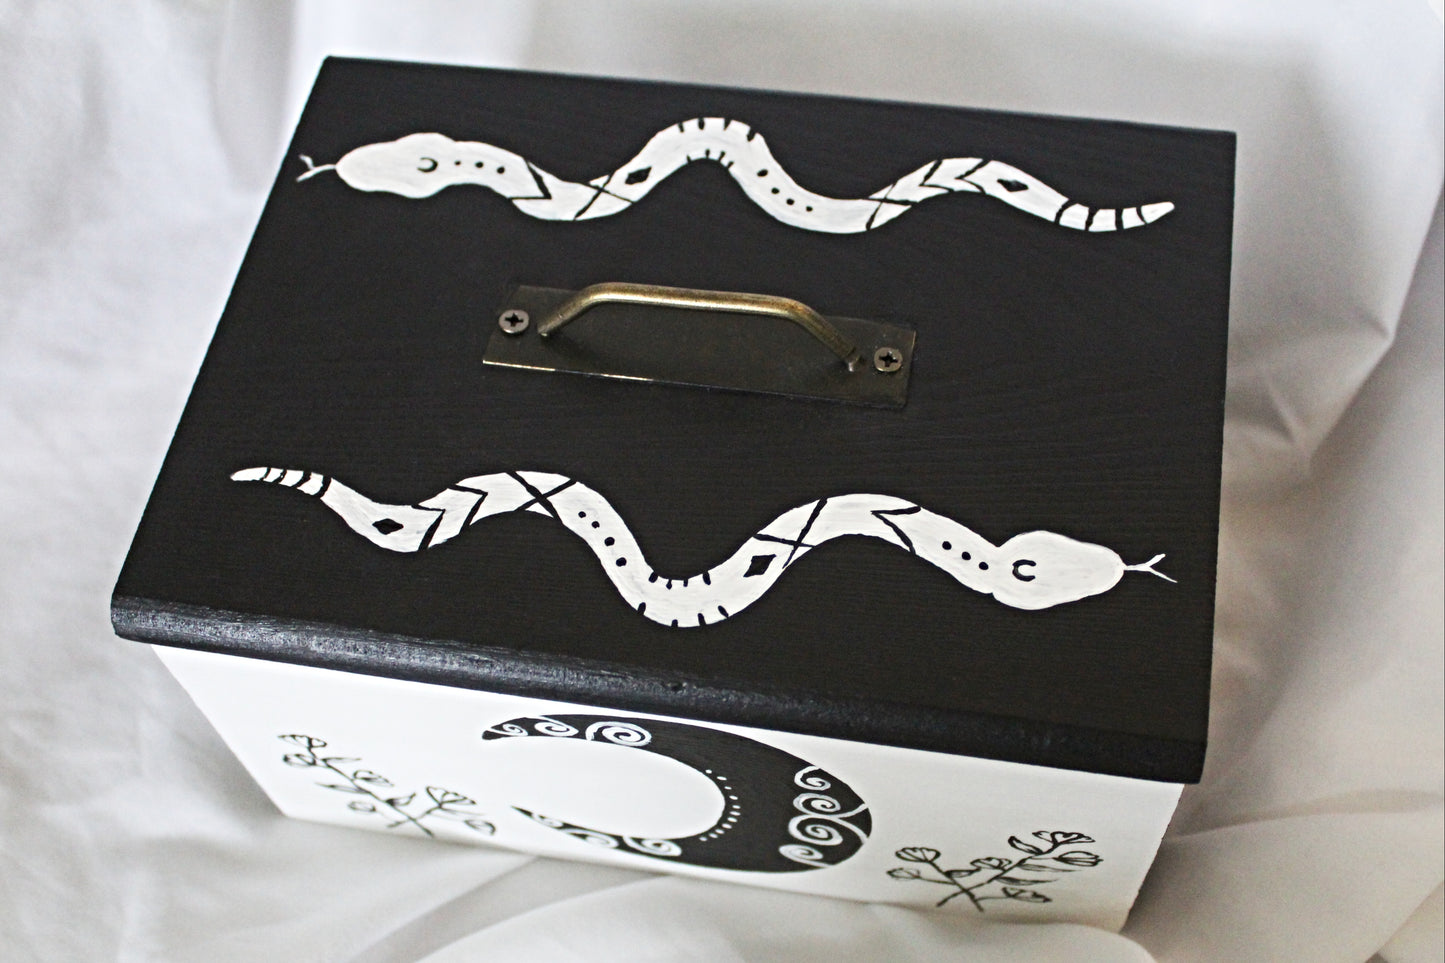 Snake and Moon Trinket Box